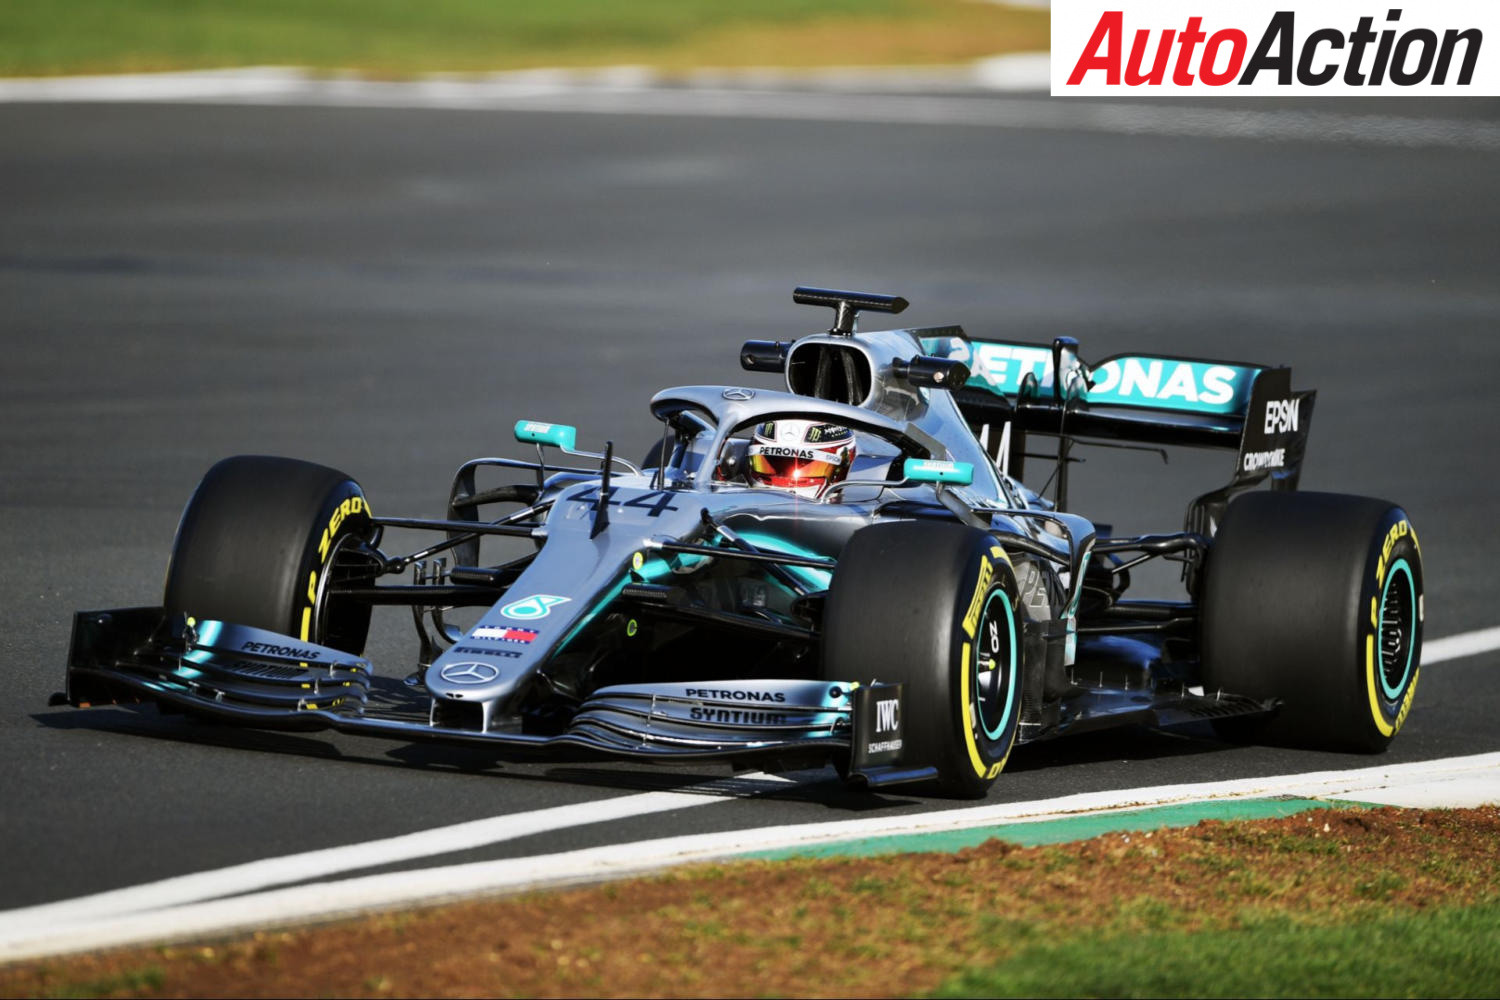 Mercedes shakedown 2019 car at Silverstone - Photo: LAT